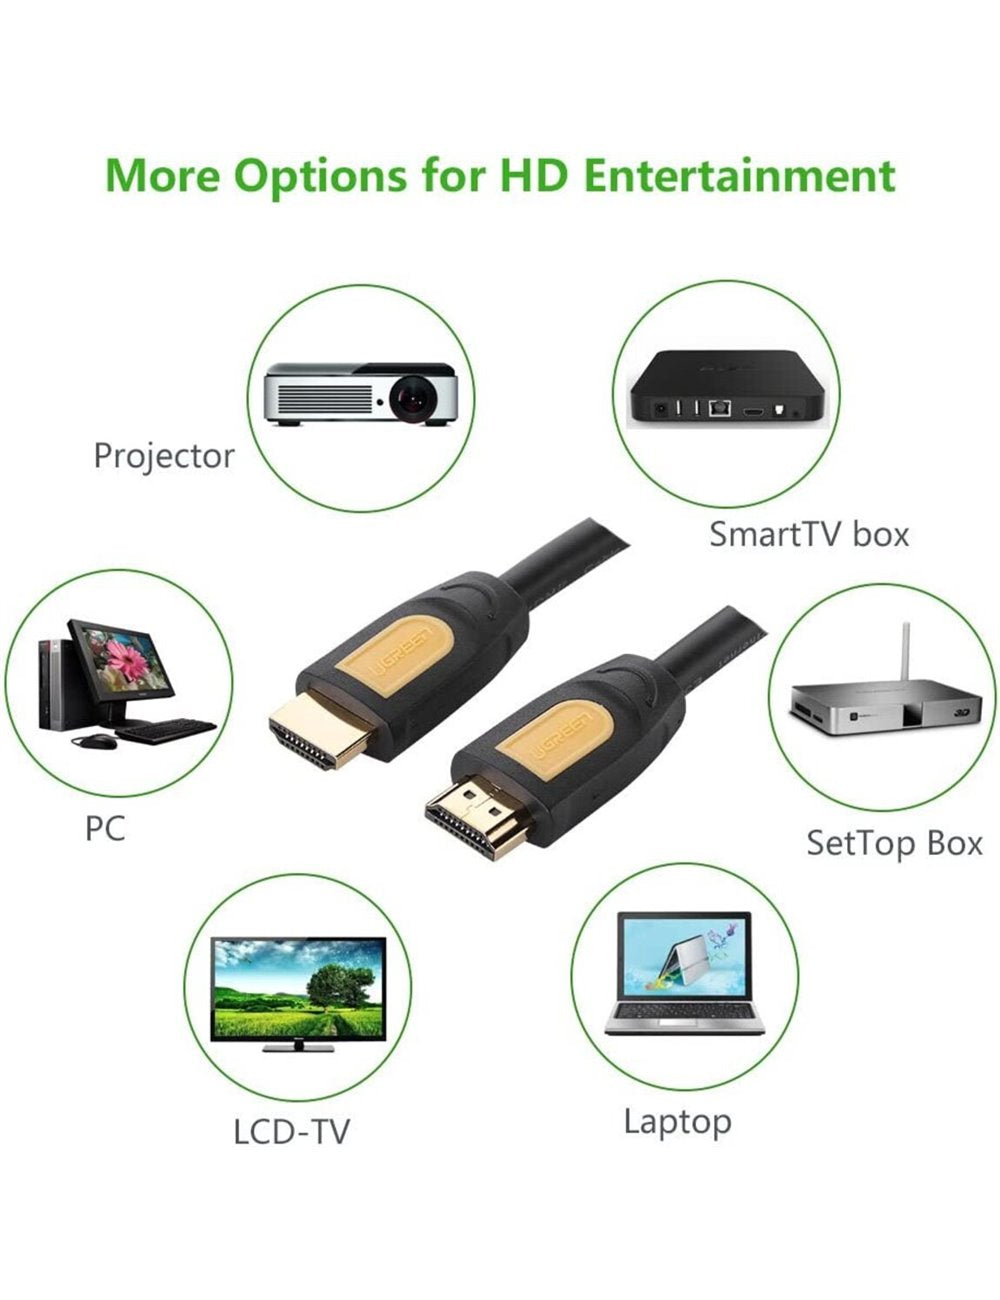 UGreen Micro HDMI to HDMI 1.5M - 30102